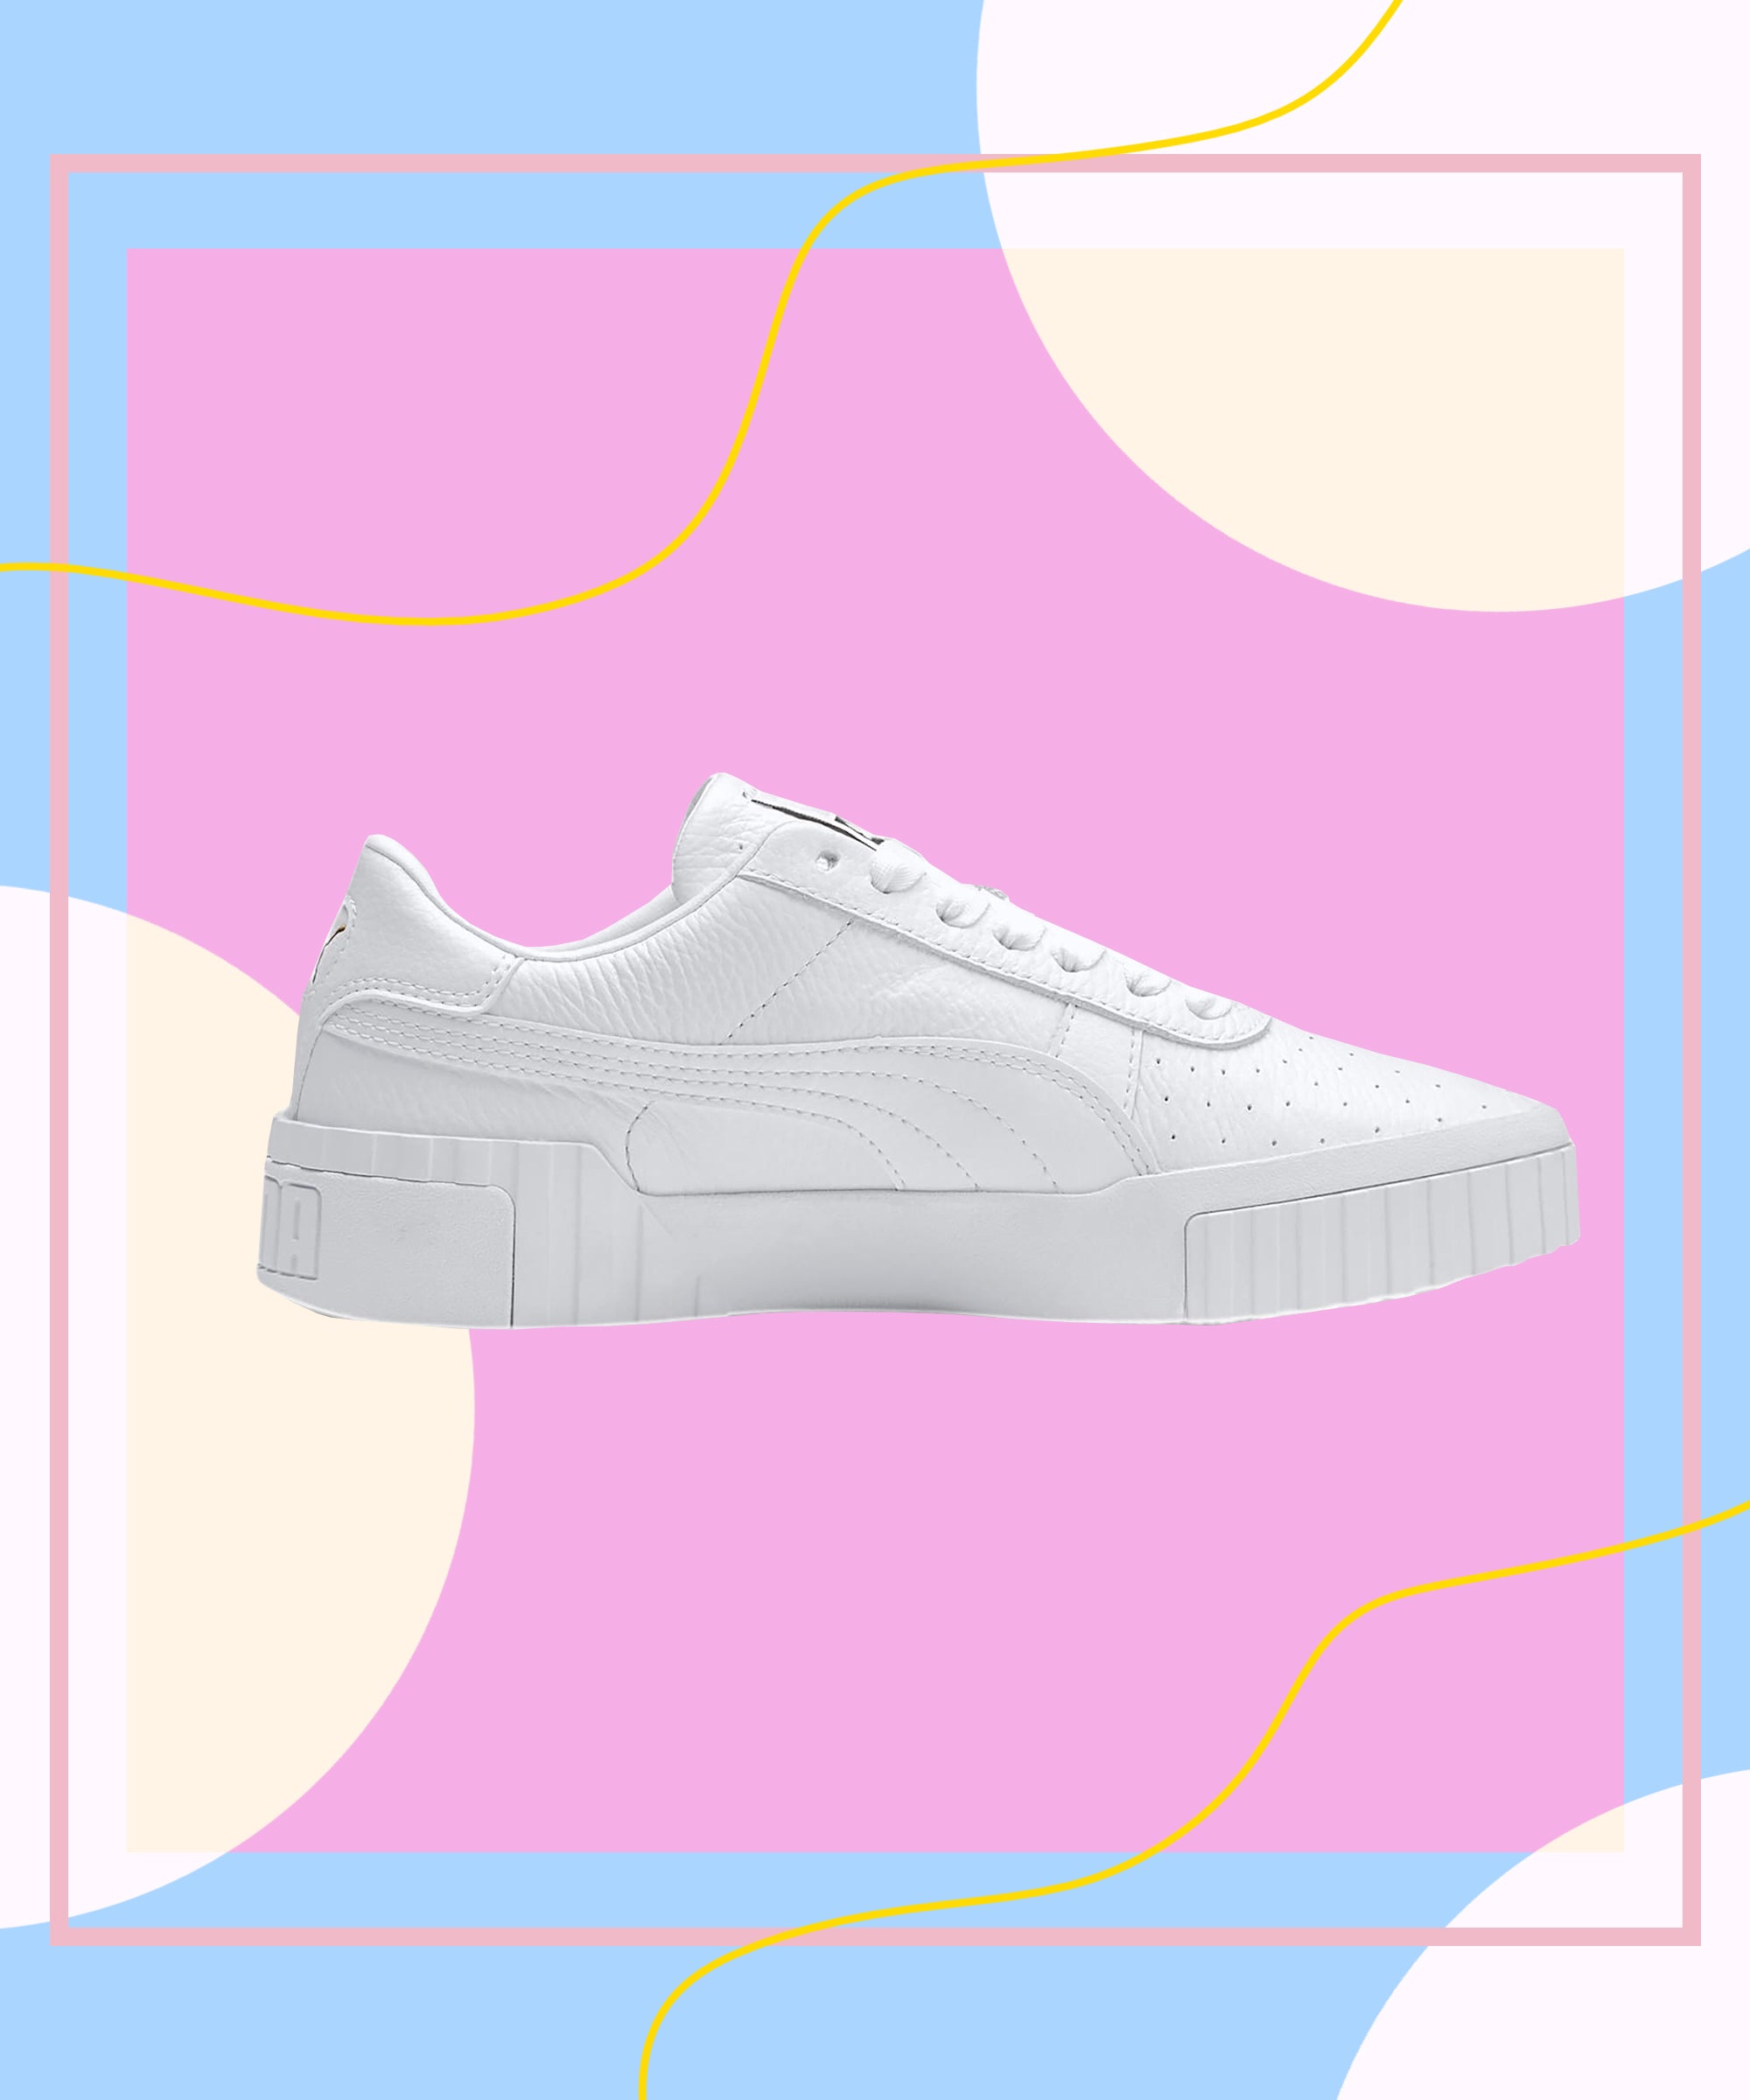 Best White Sneakers For Women - 2020 